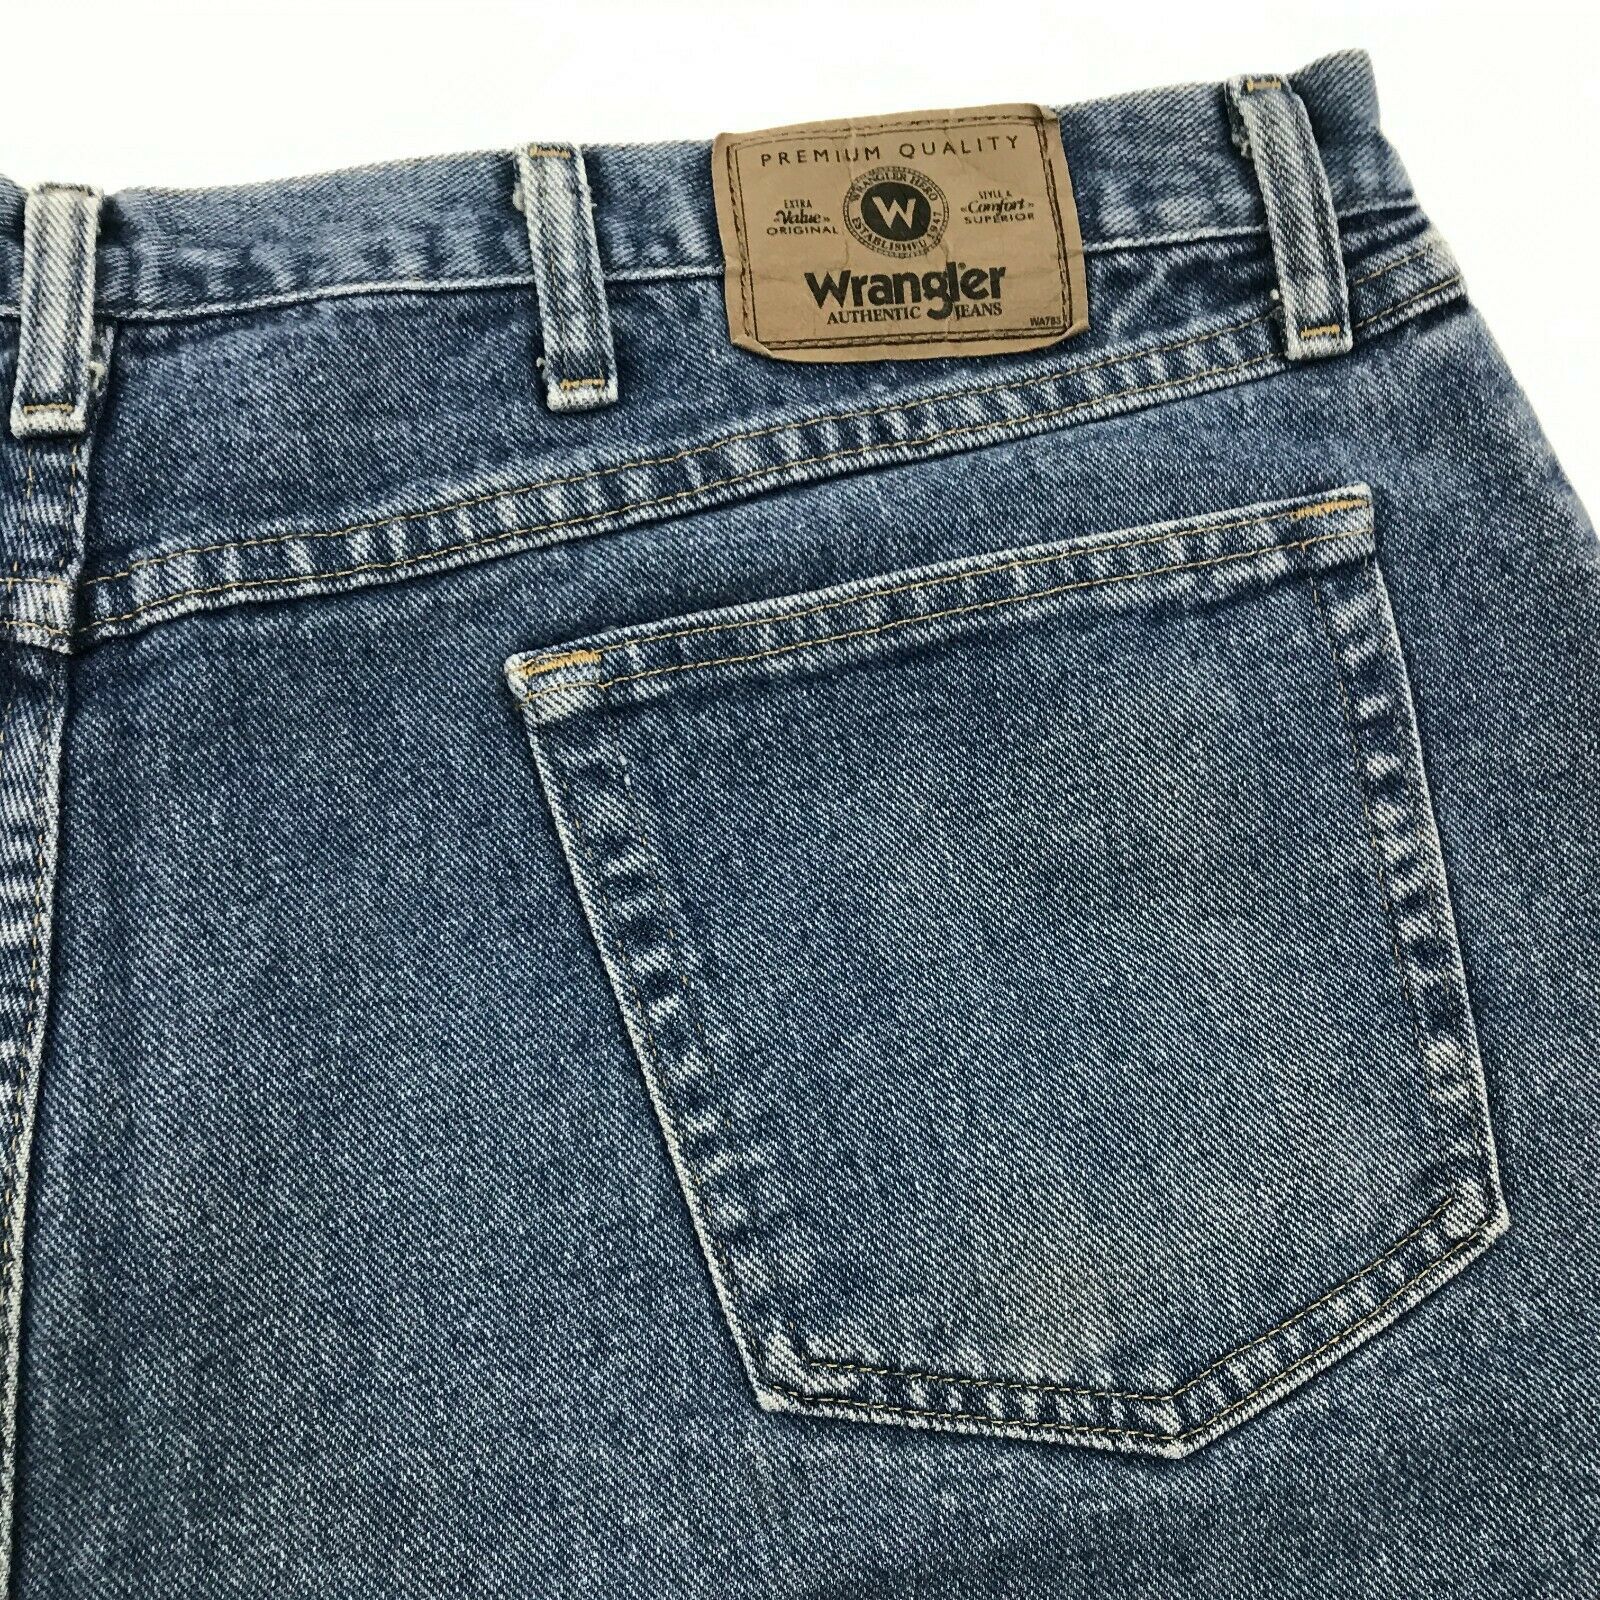 Wrangler Jean Shorts Relaxed Fit Size 42 Men's Baggy Blue Denim Short ...